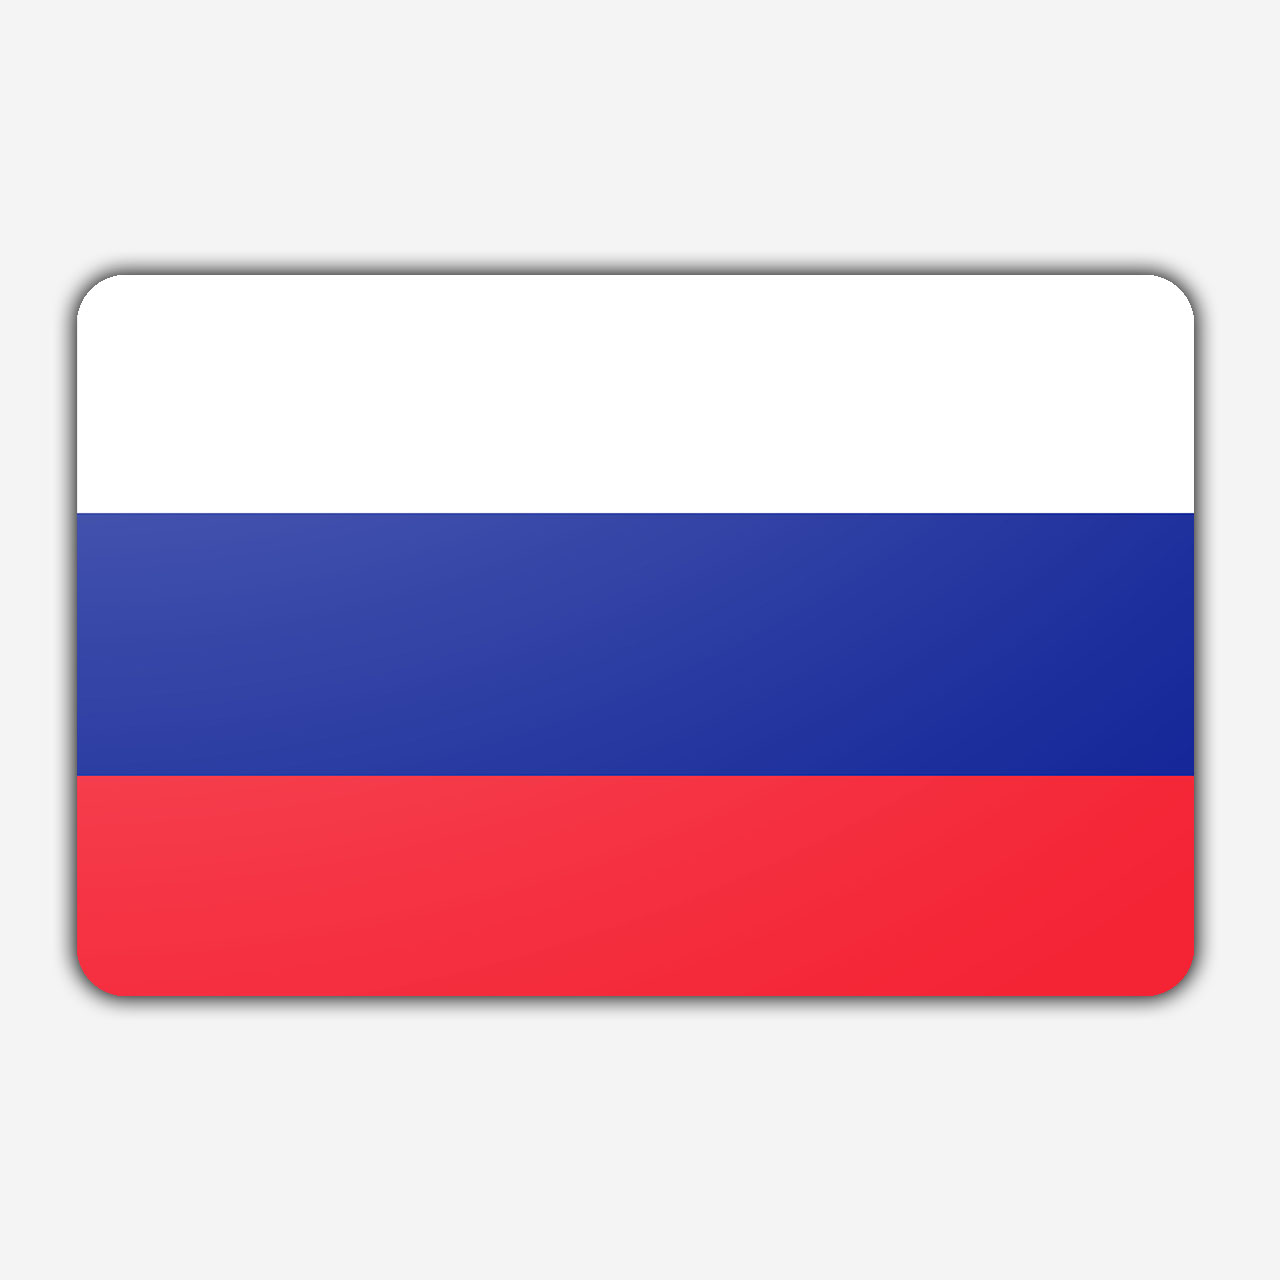 Marine Bewust Productief Vlag Rusland kopen? | Snelle levering & 8.7 klantbeoordeling | Vlaggen.com